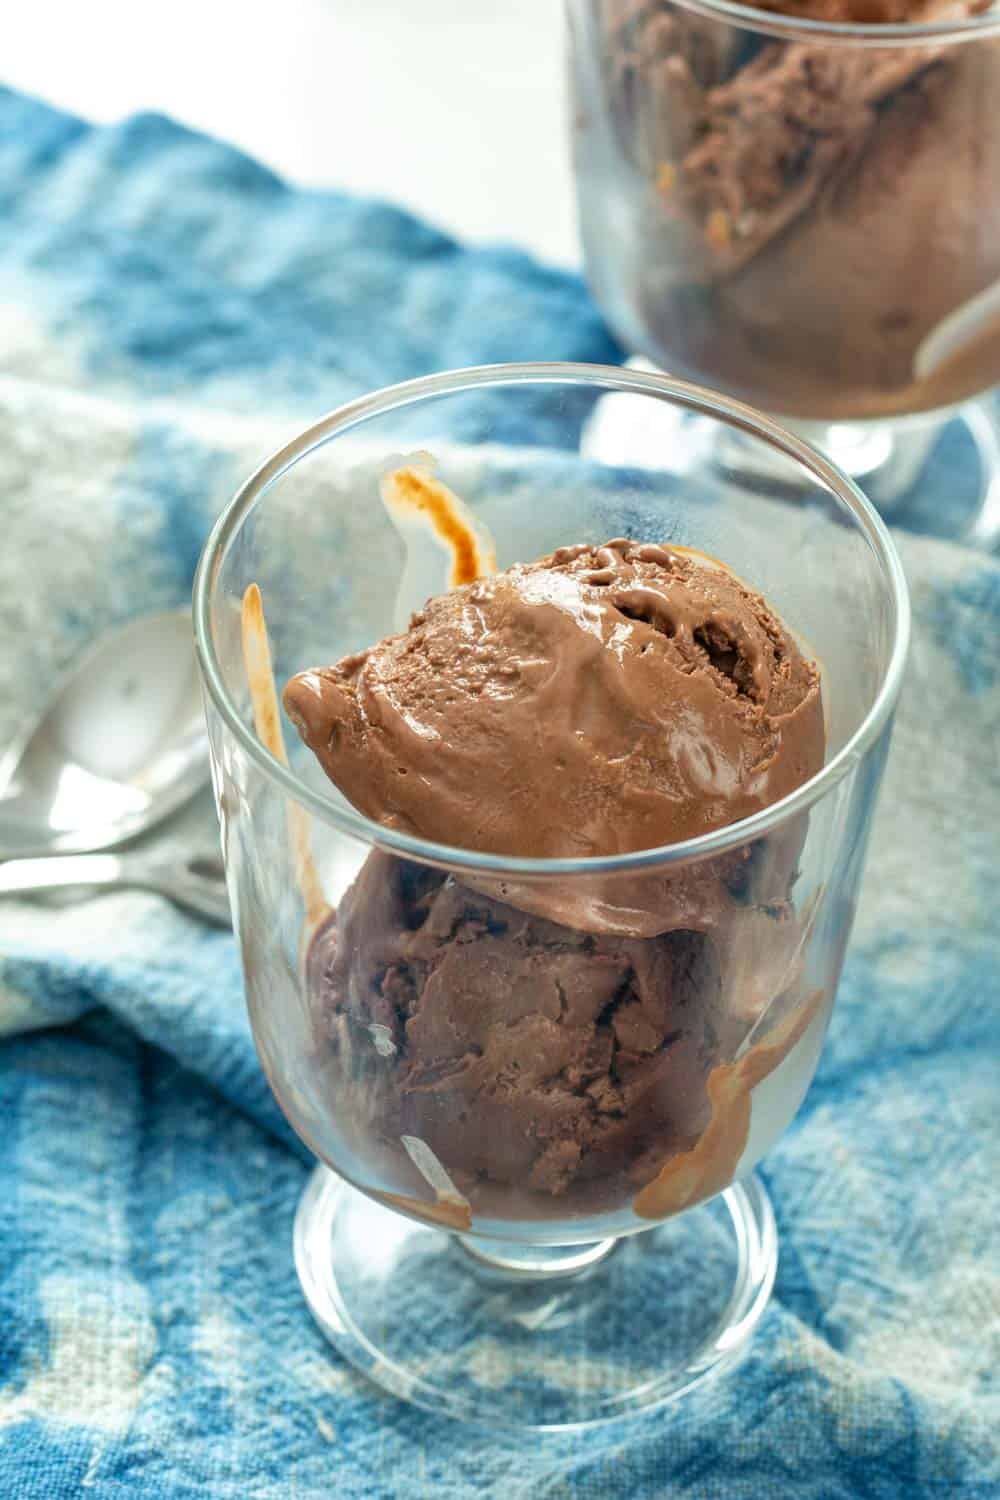 https://www.stetted.com/wp-content/uploads/2021/06/Chocolate-Frozen-Yogurt-Image.jpg